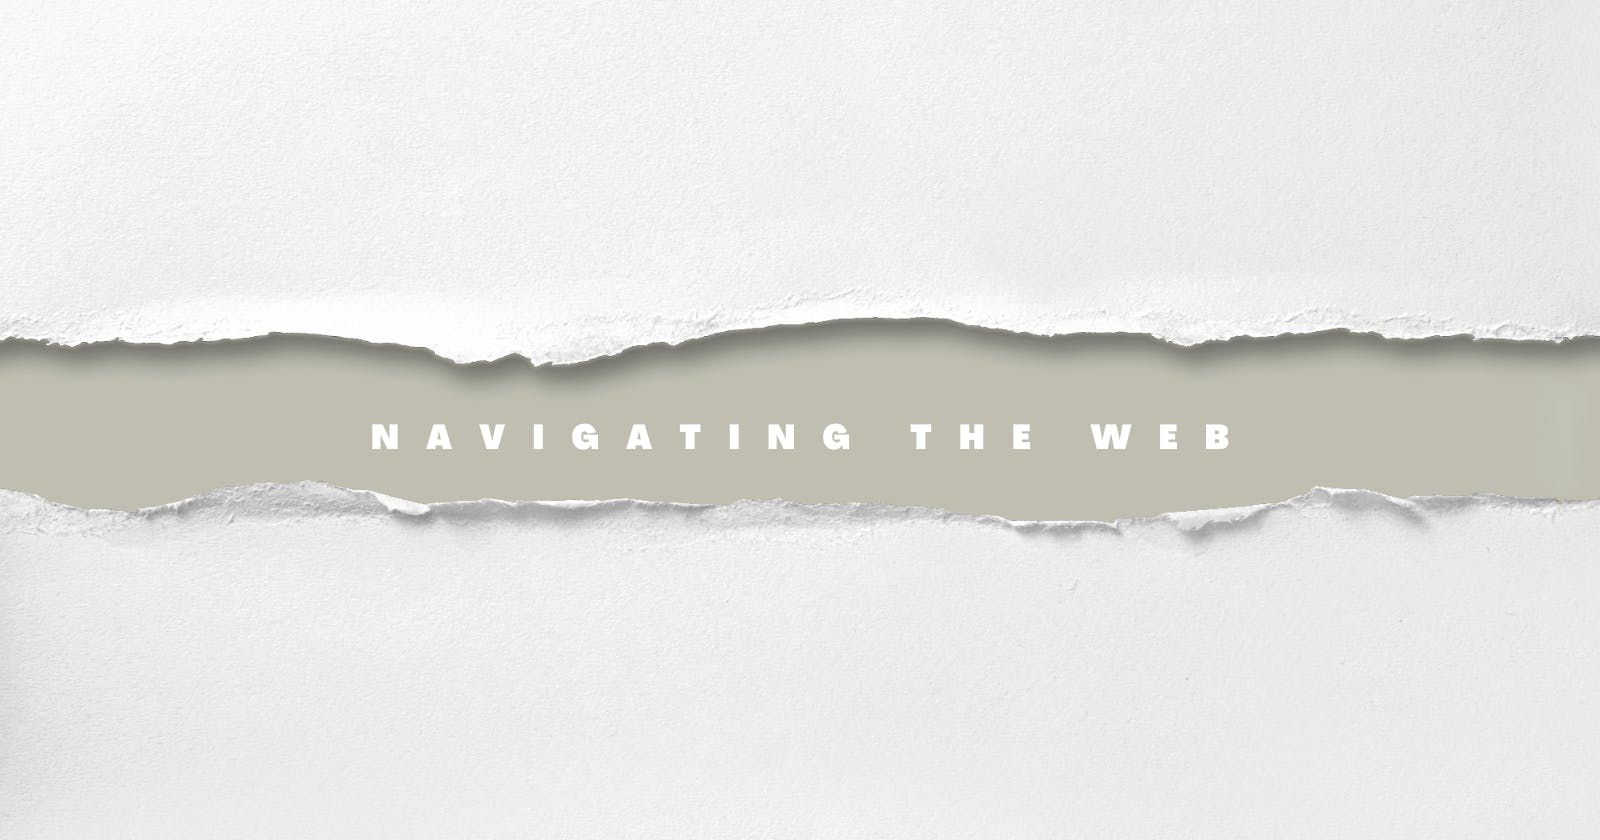 Navigating the Web